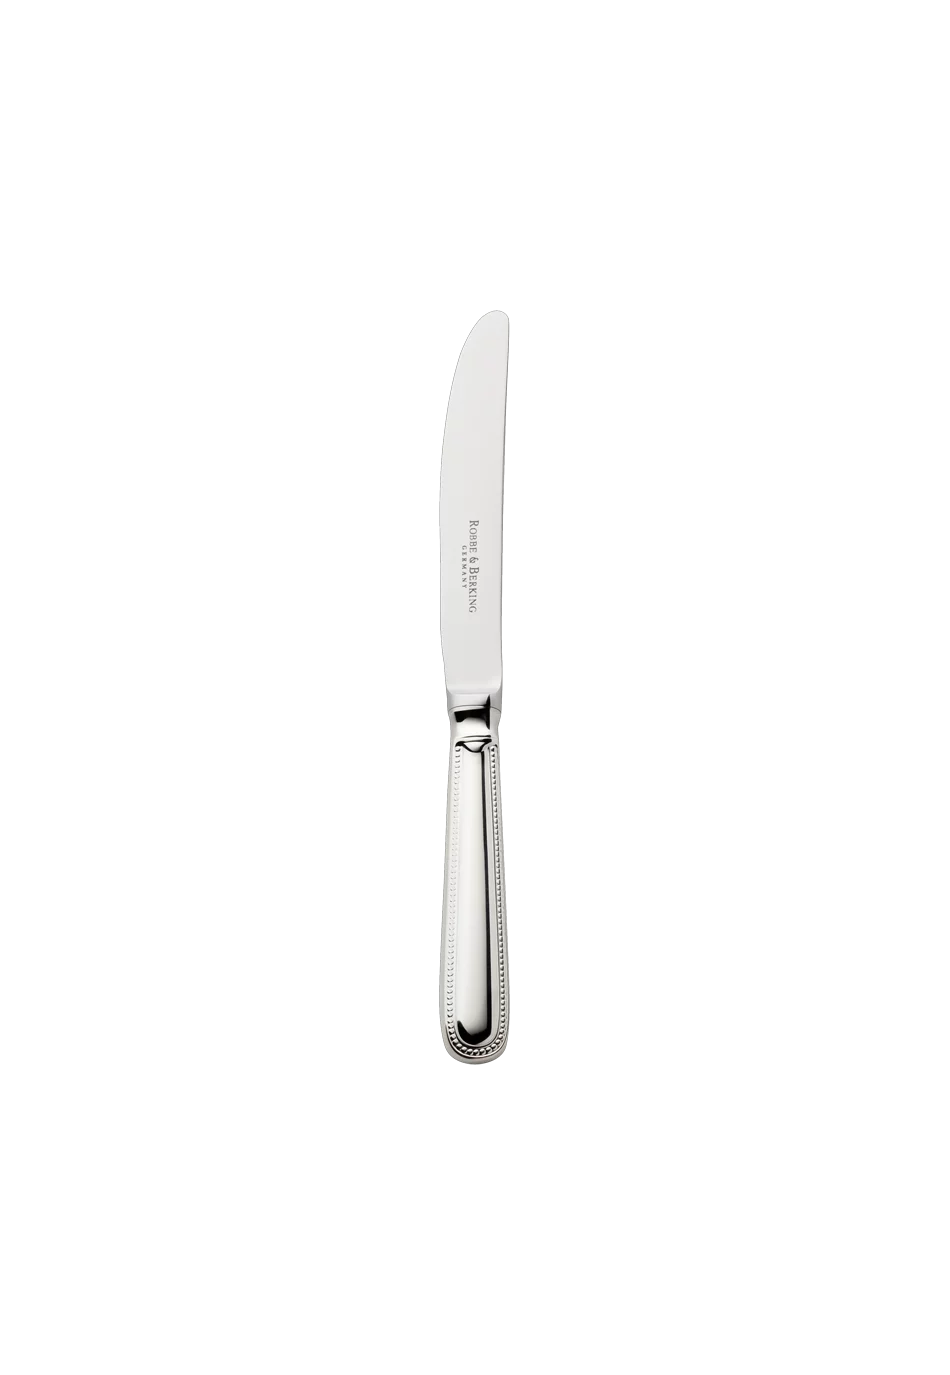 Französisch-Perl Cake Knife / Fruit Knife (150g massive silverplated)